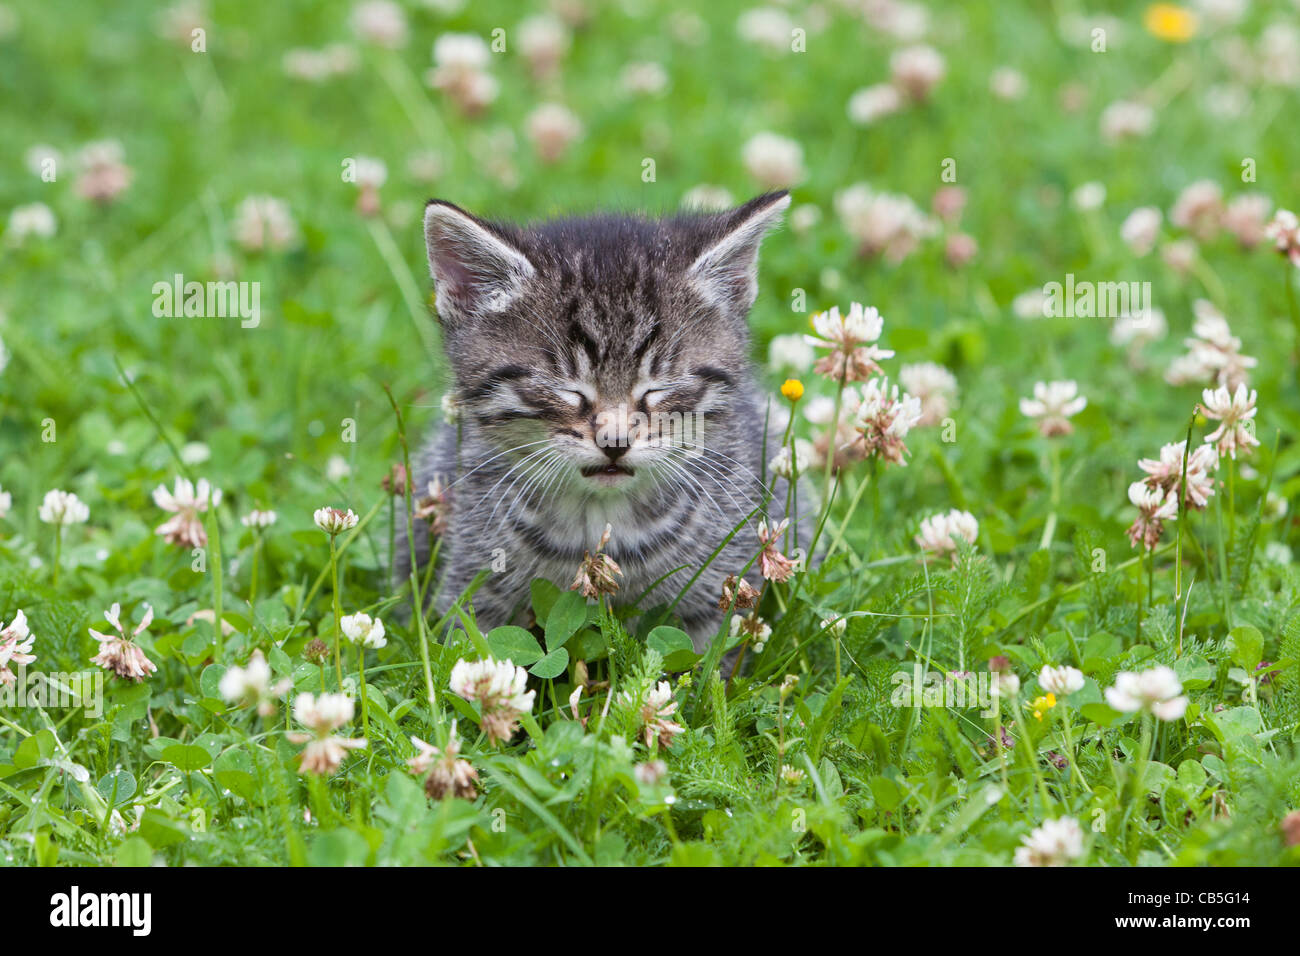 Kitten, having a cat nap or sleeping on garden lawn, amongst clover, Lower Saxony, Germany Stock Photo